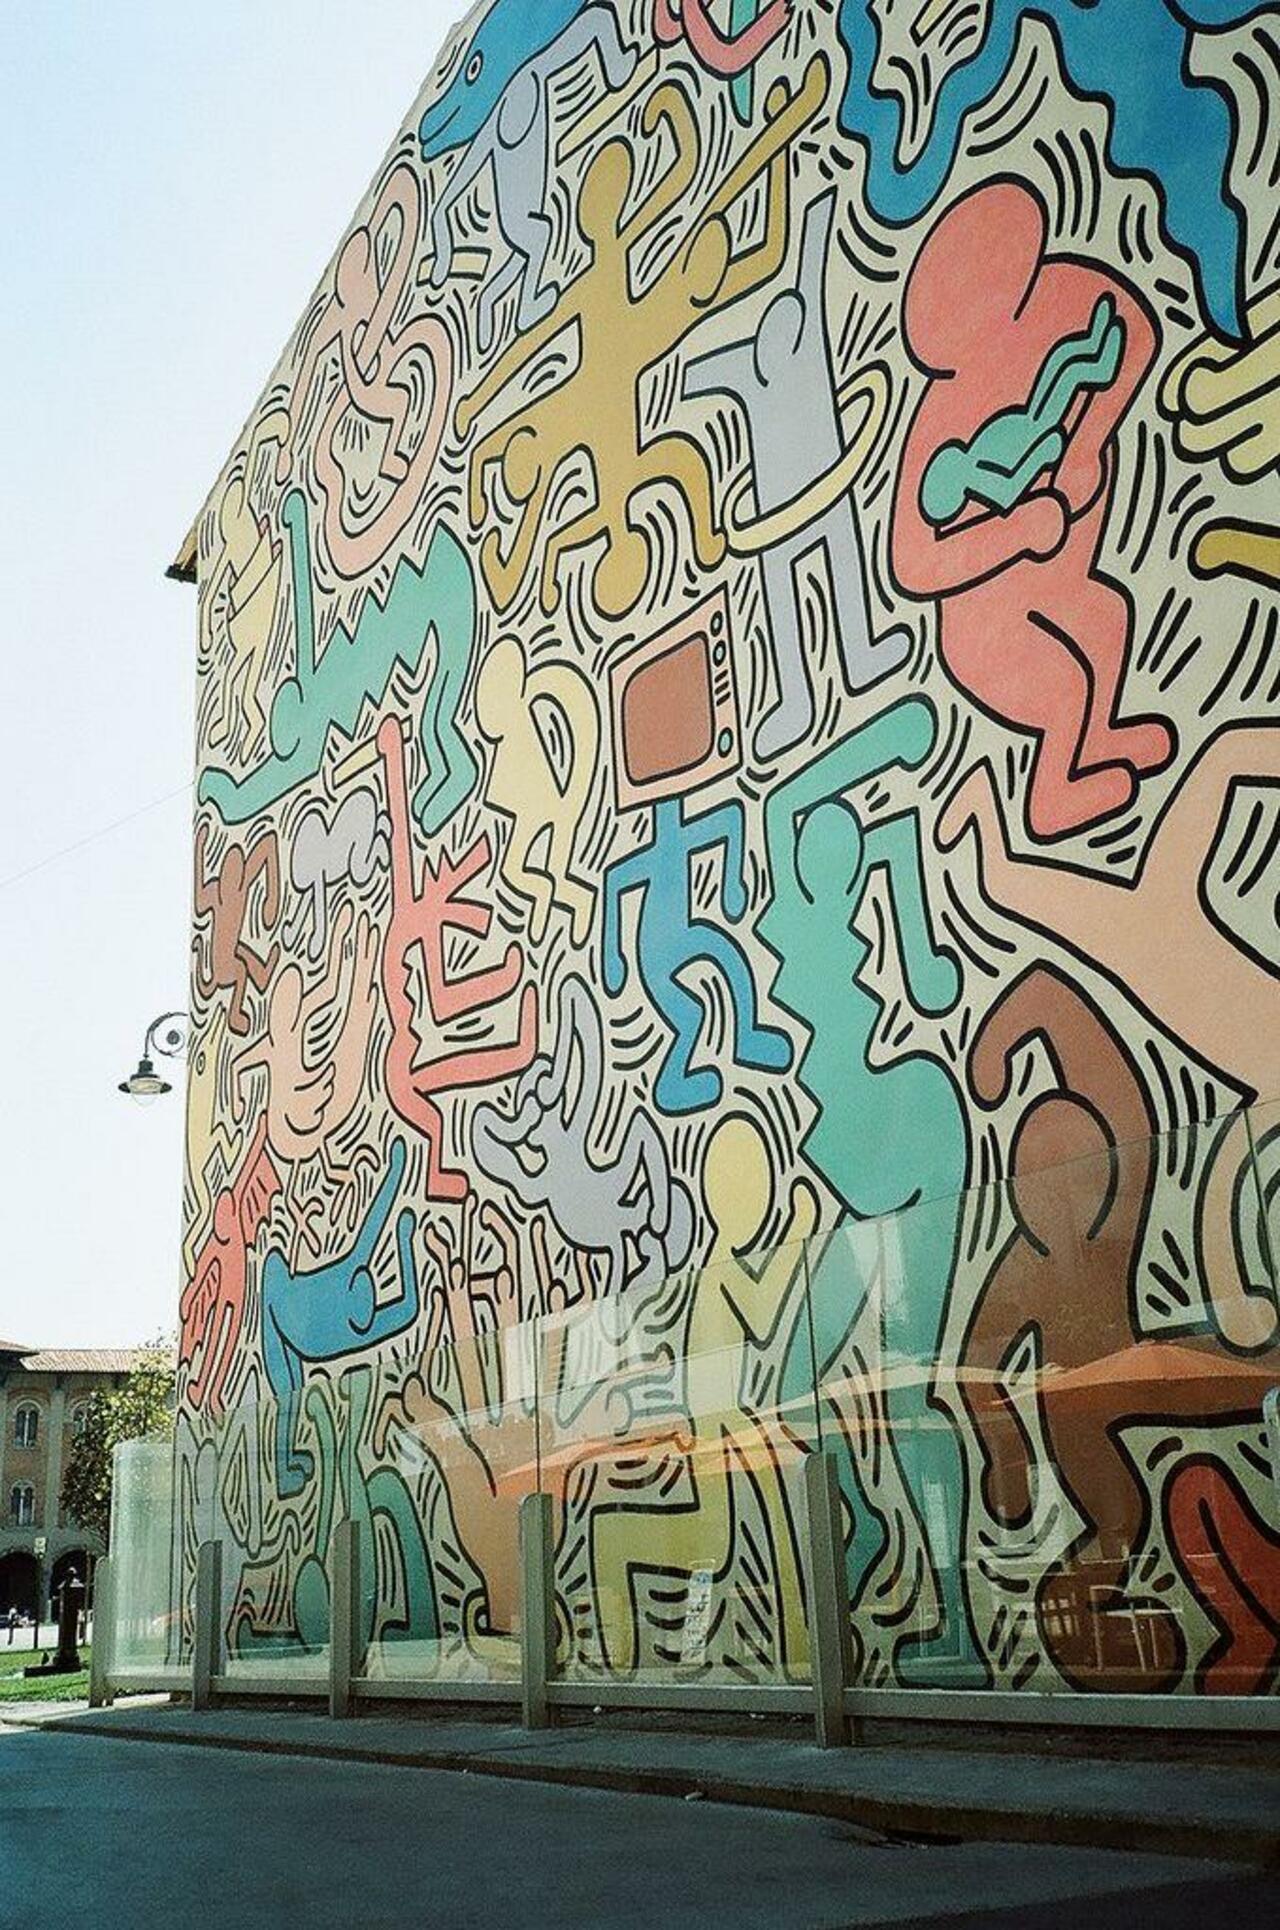 RT @StreetArtBuzz: Keith Haring's 1989  http://twib.in/l/jzGeRzeEdGK #art #design #graffiti http://t.co/vmCashCLPN